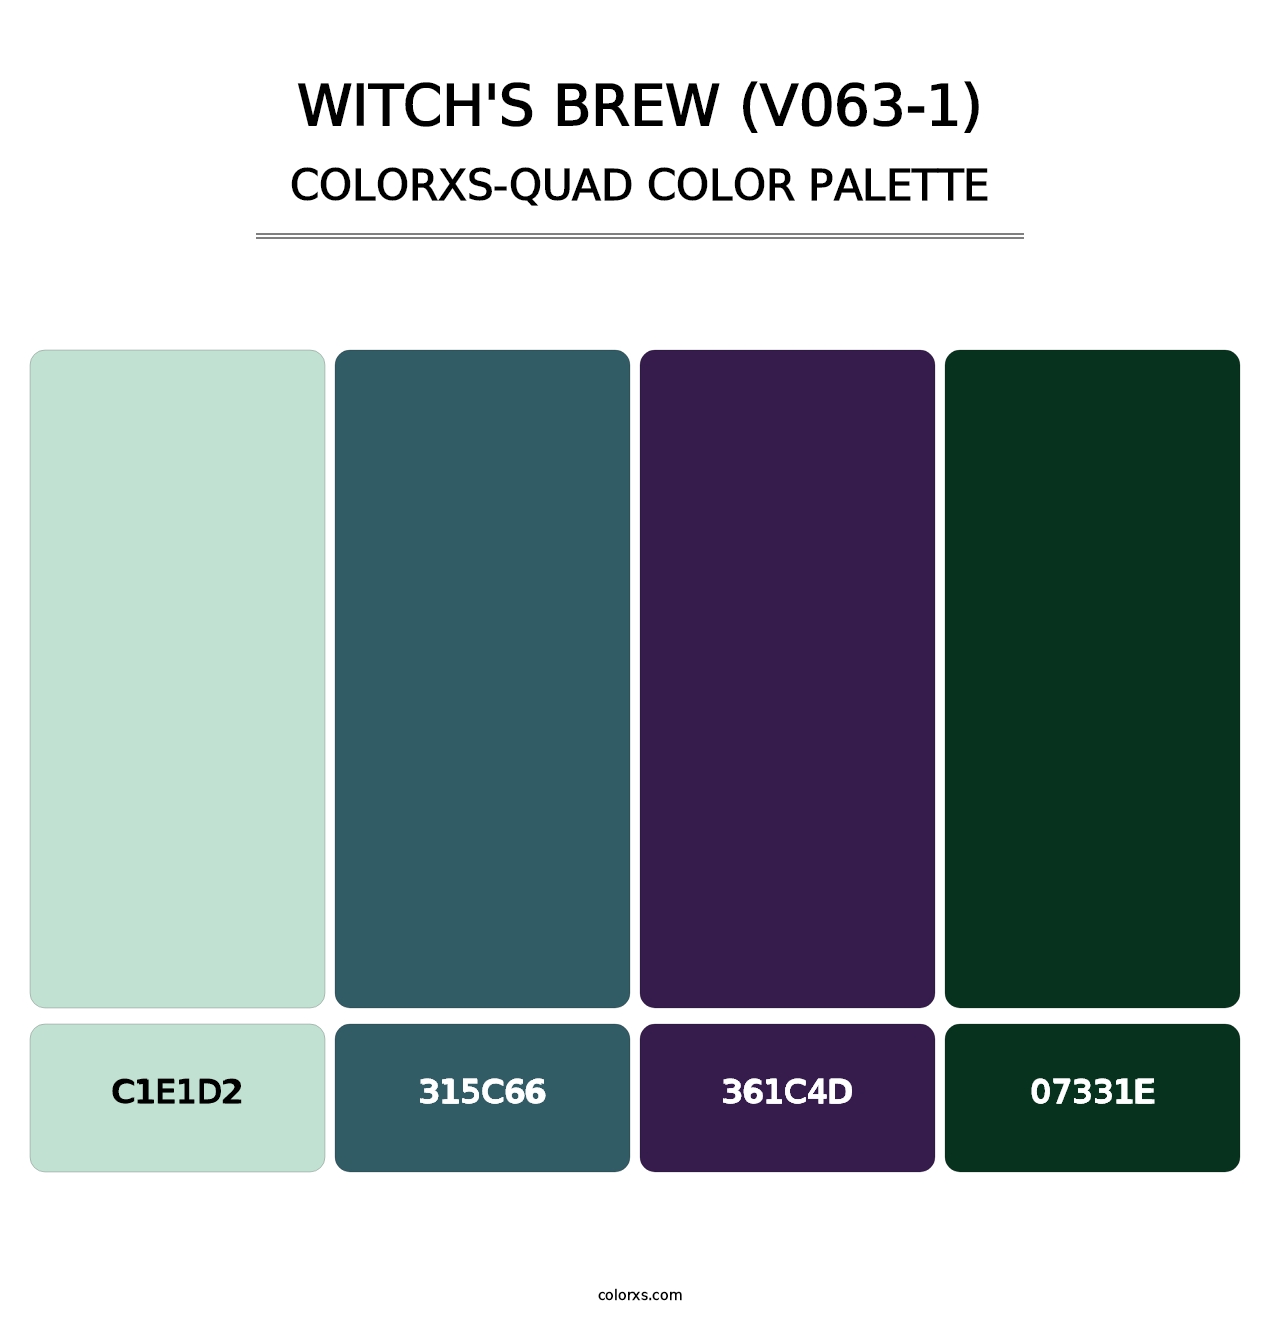 Witch's Brew (V063-1) - Colorxs Quad Palette